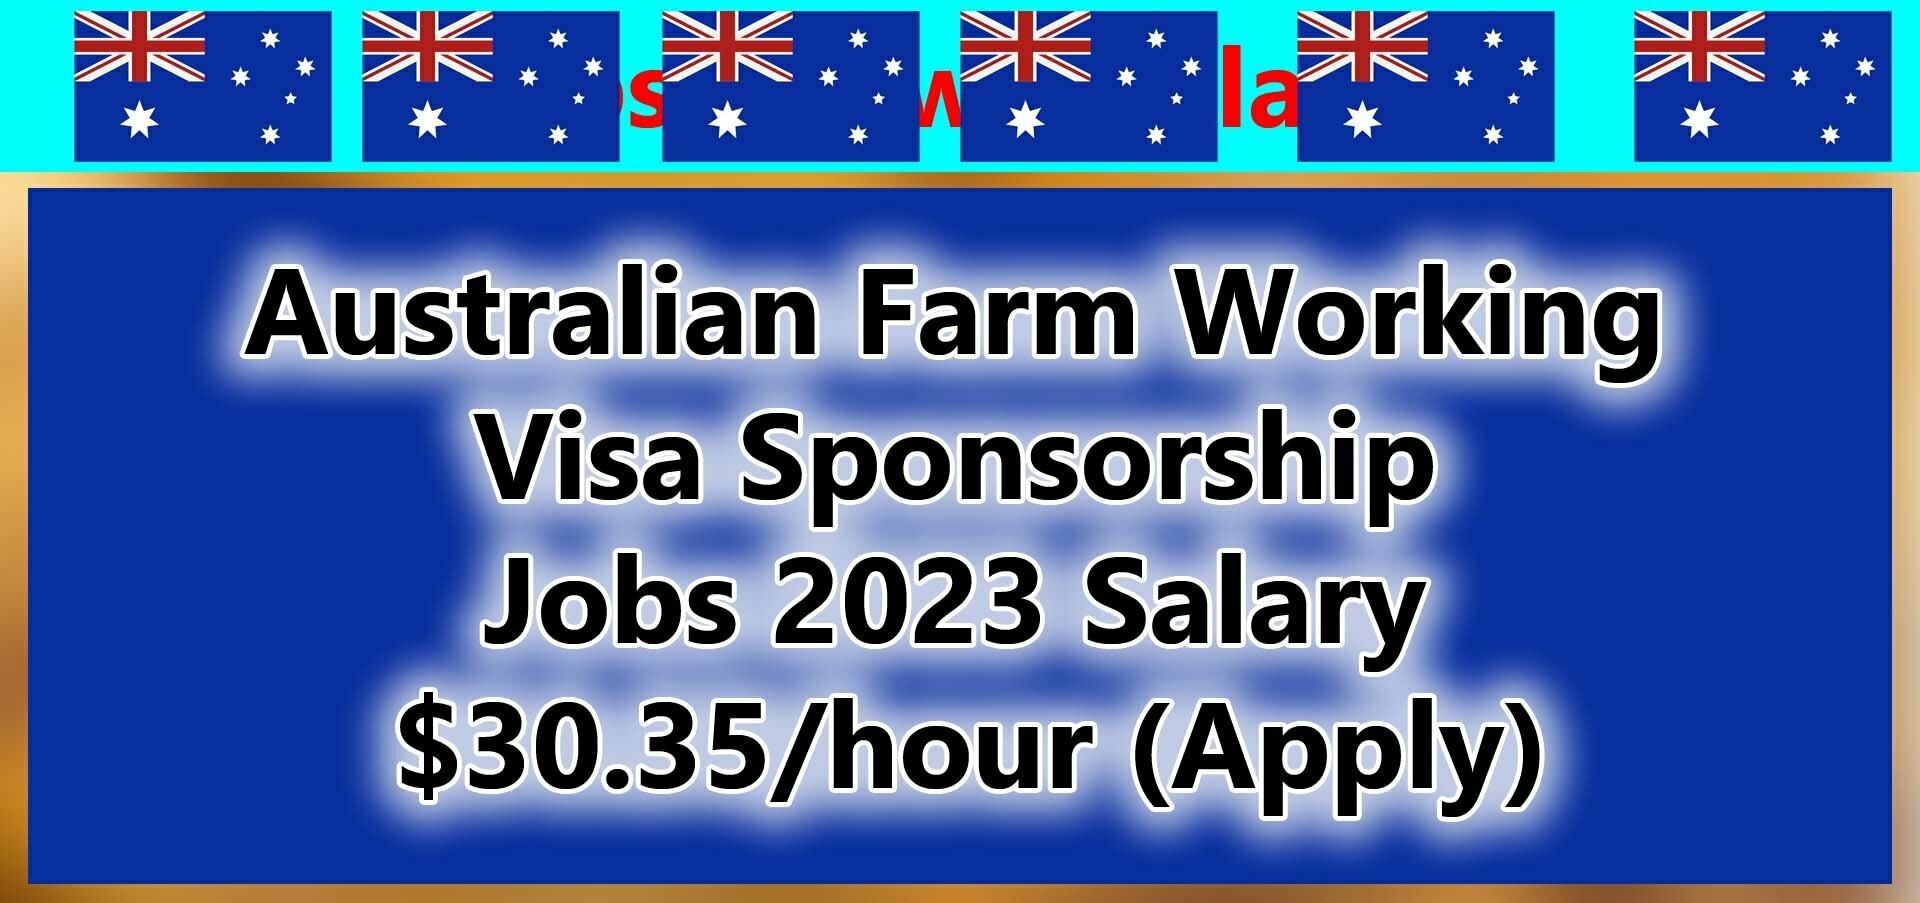 How to get Australia Agriculture Work visa Sponsorship